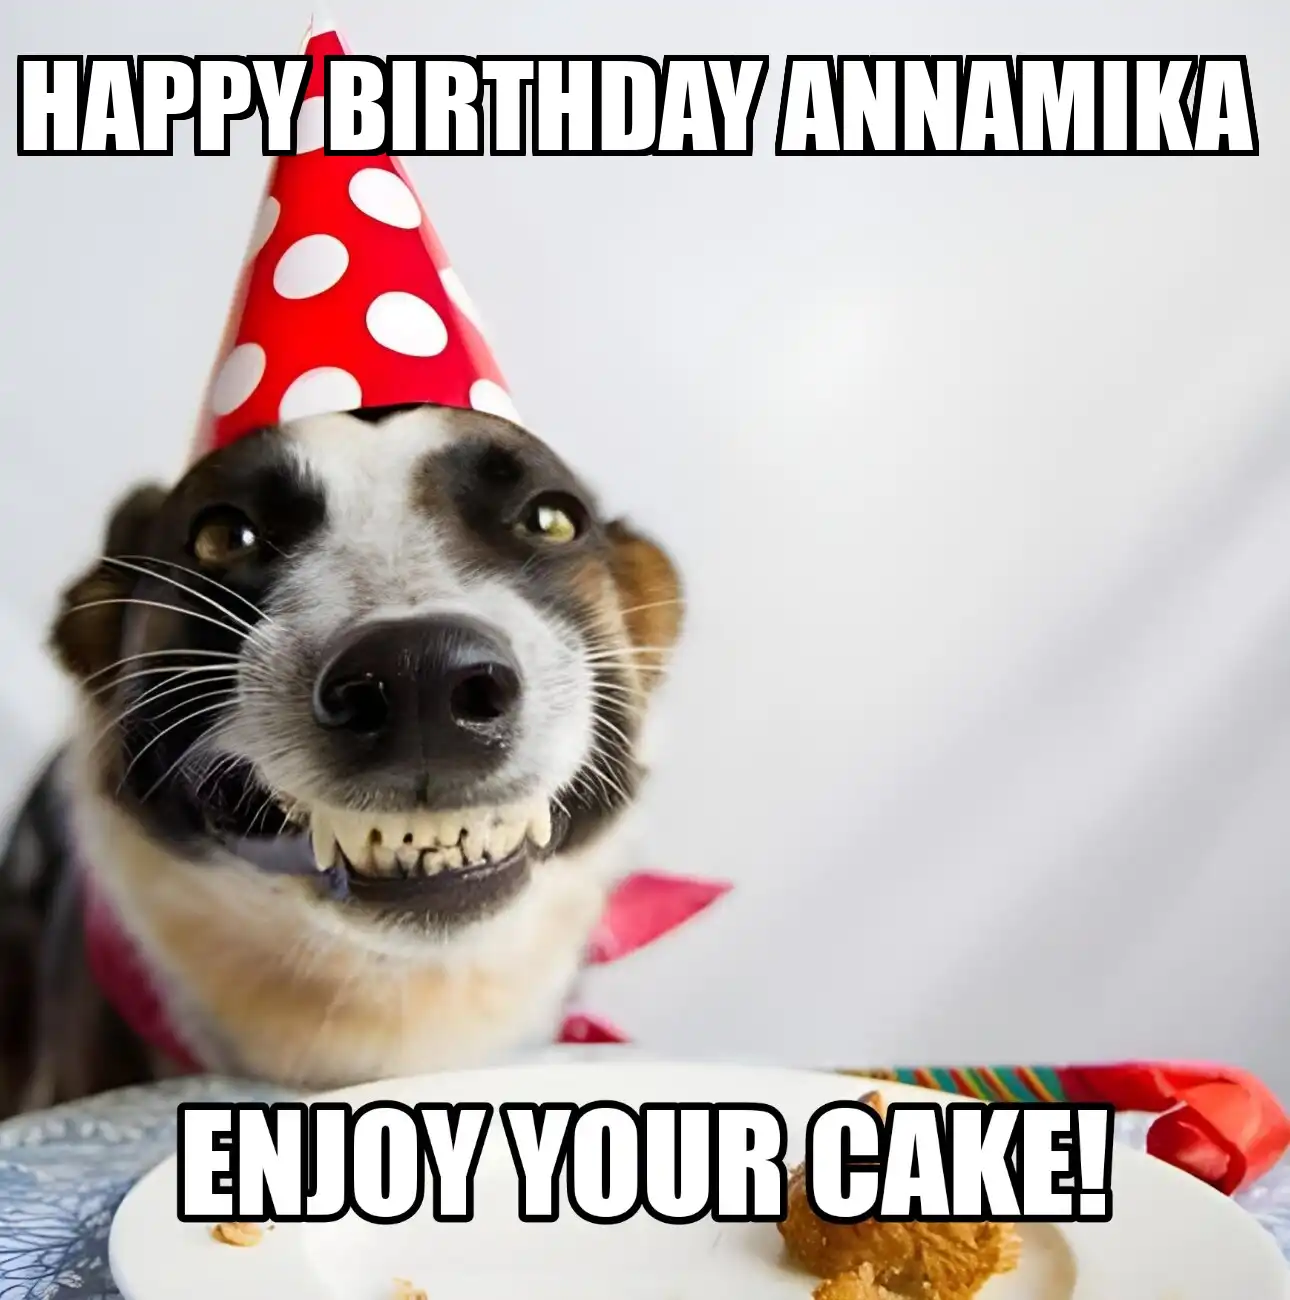 Happy Birthday Annamika Enjoy Your Cake Dog Meme